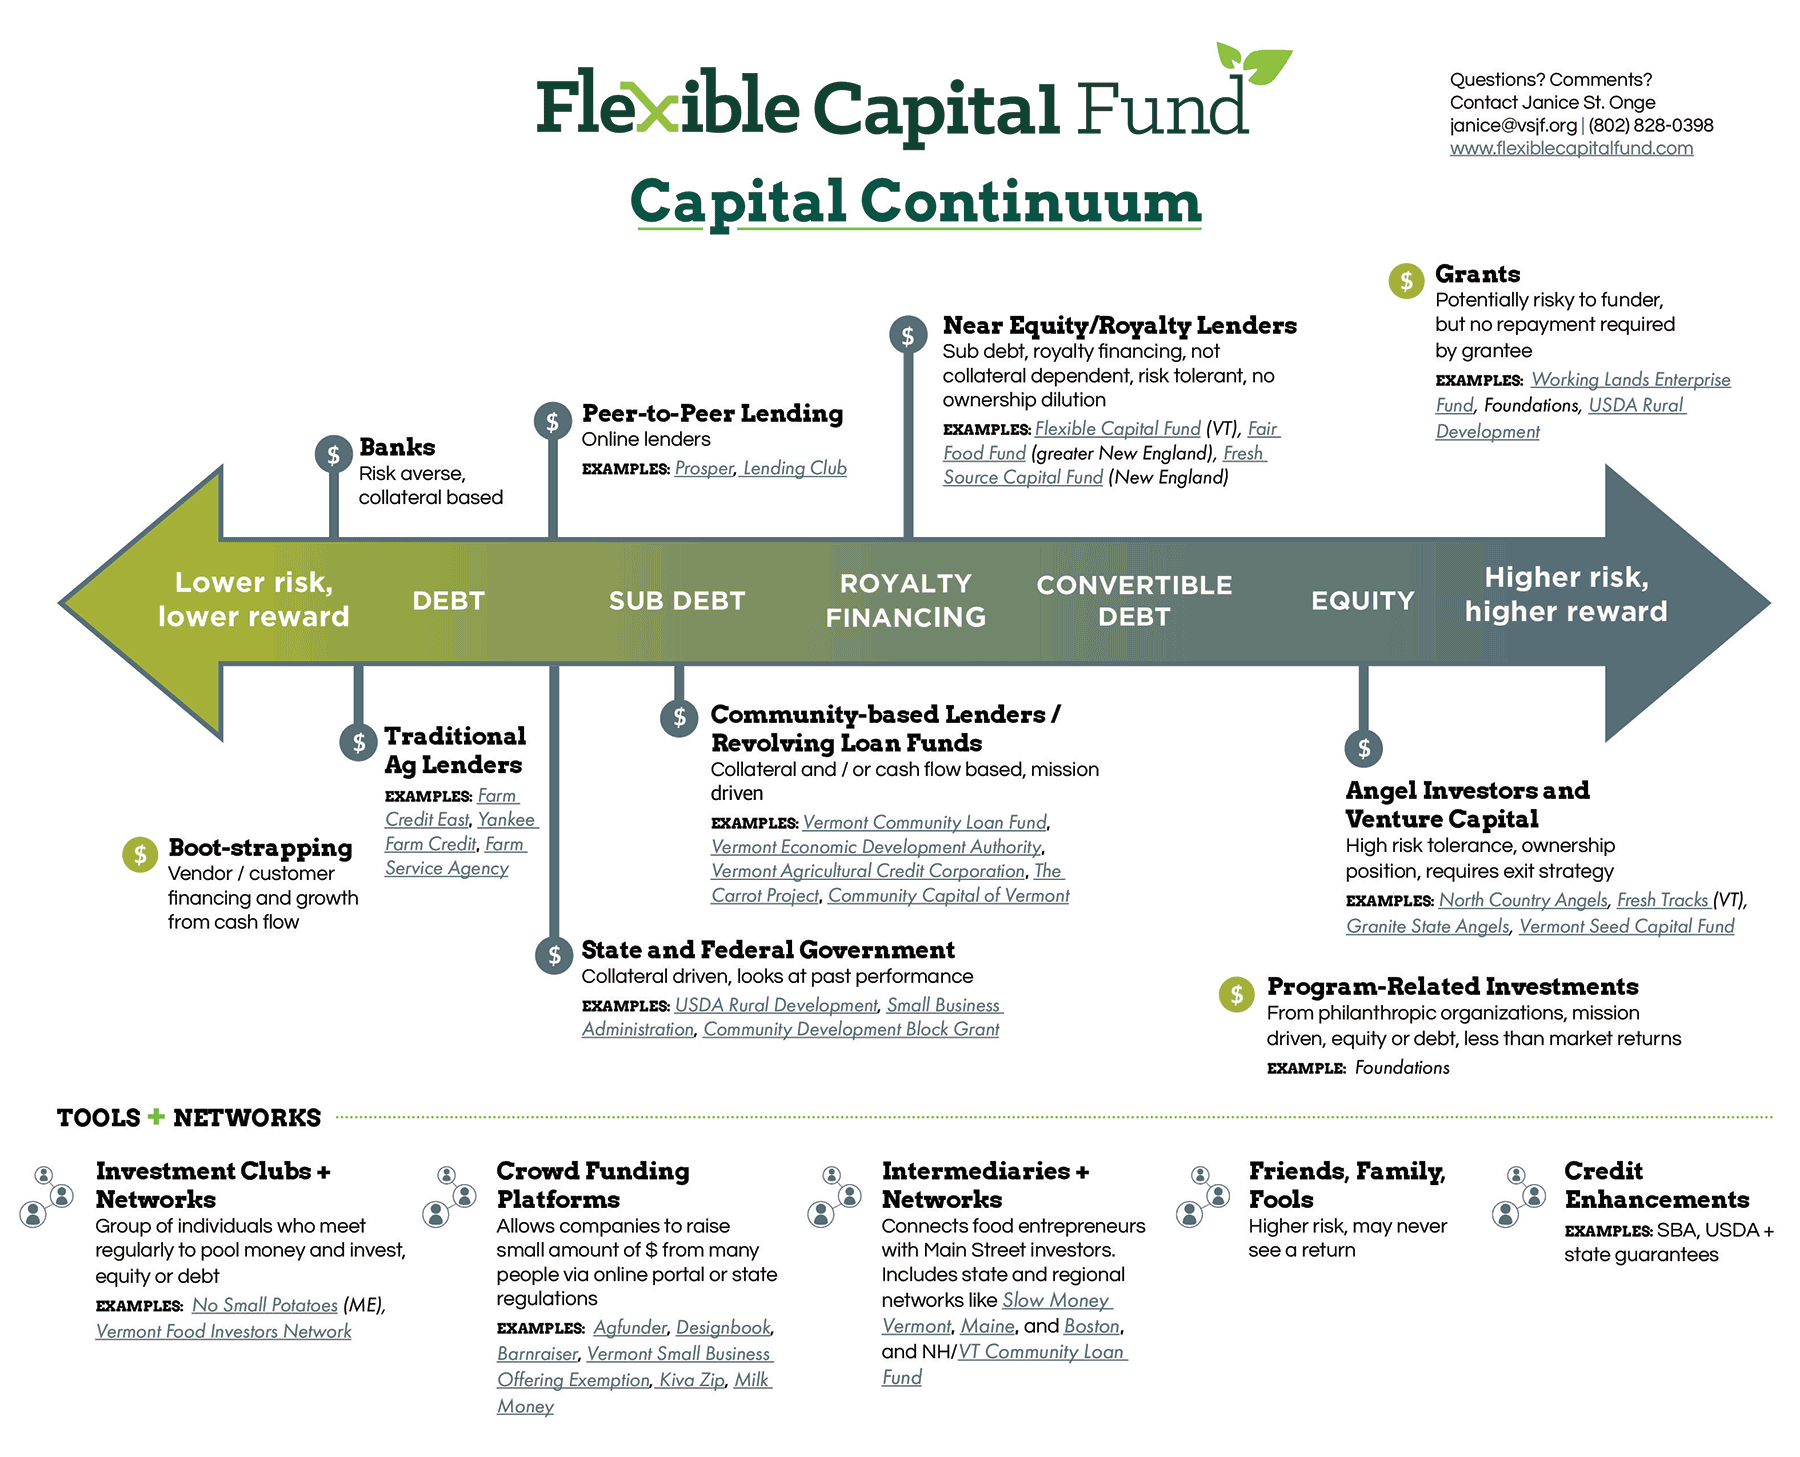 Flex Fund Vermont Capital Continuum chart